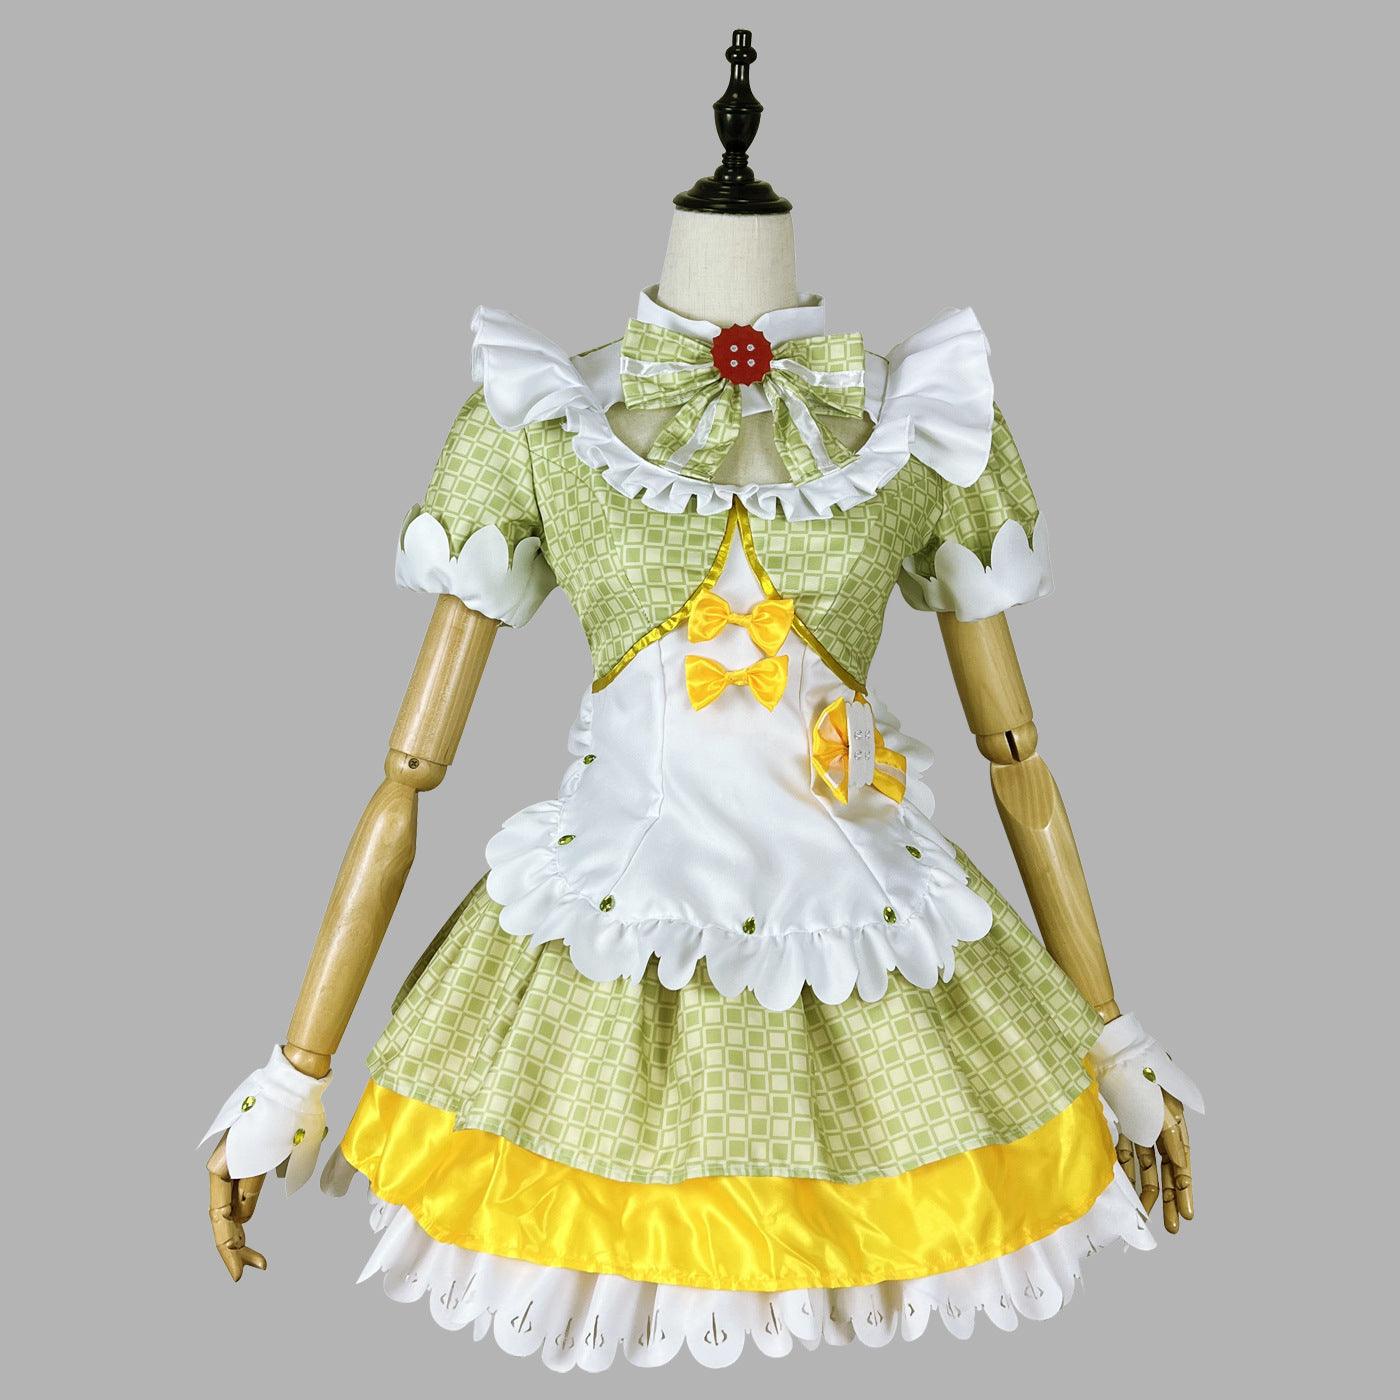 Honor of Kings Daji Green Maid Outfit Lolita Dress Anime Game Skin Fancy Cosplay Costume